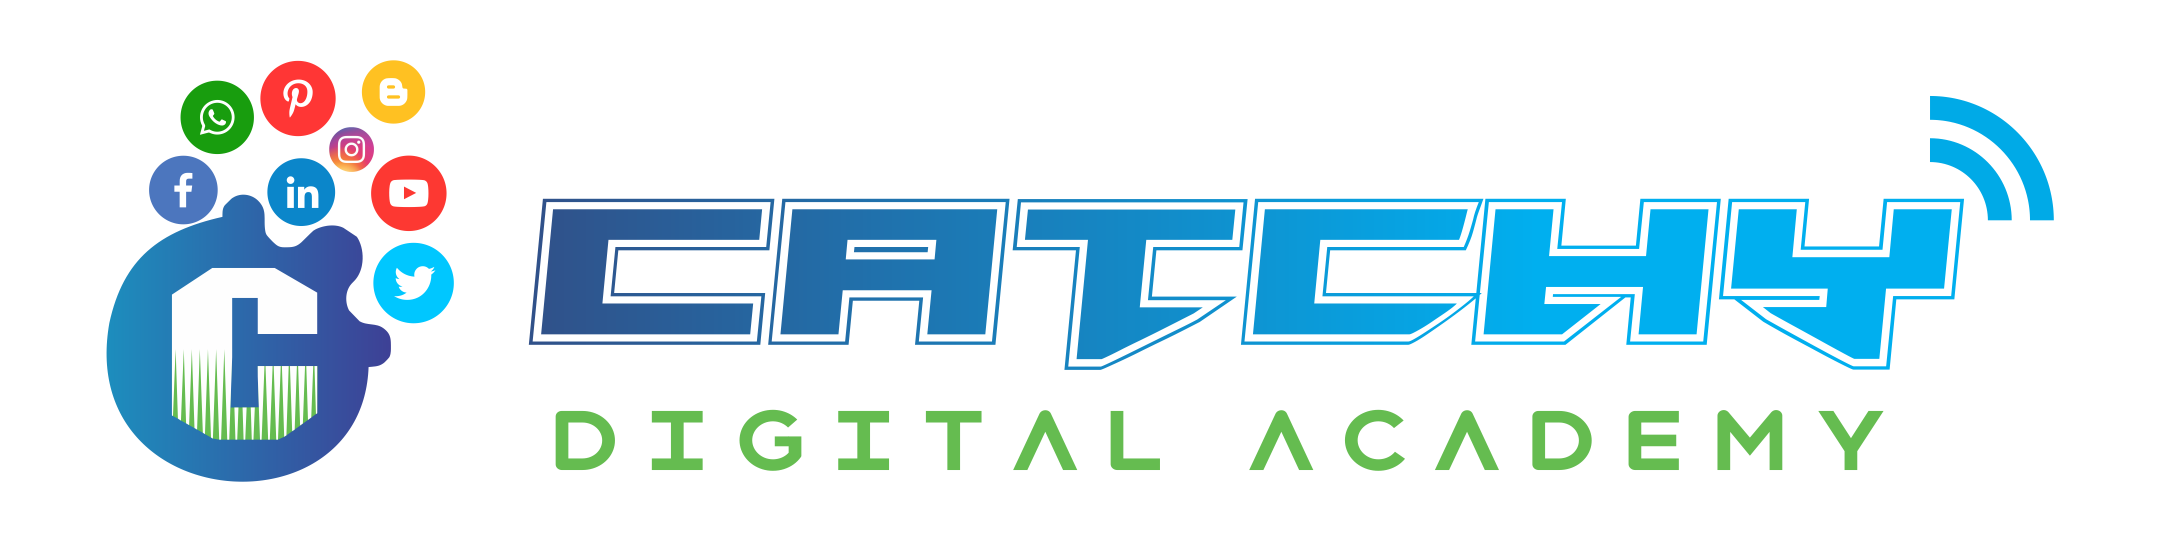 Catchy Digital Academy Logo